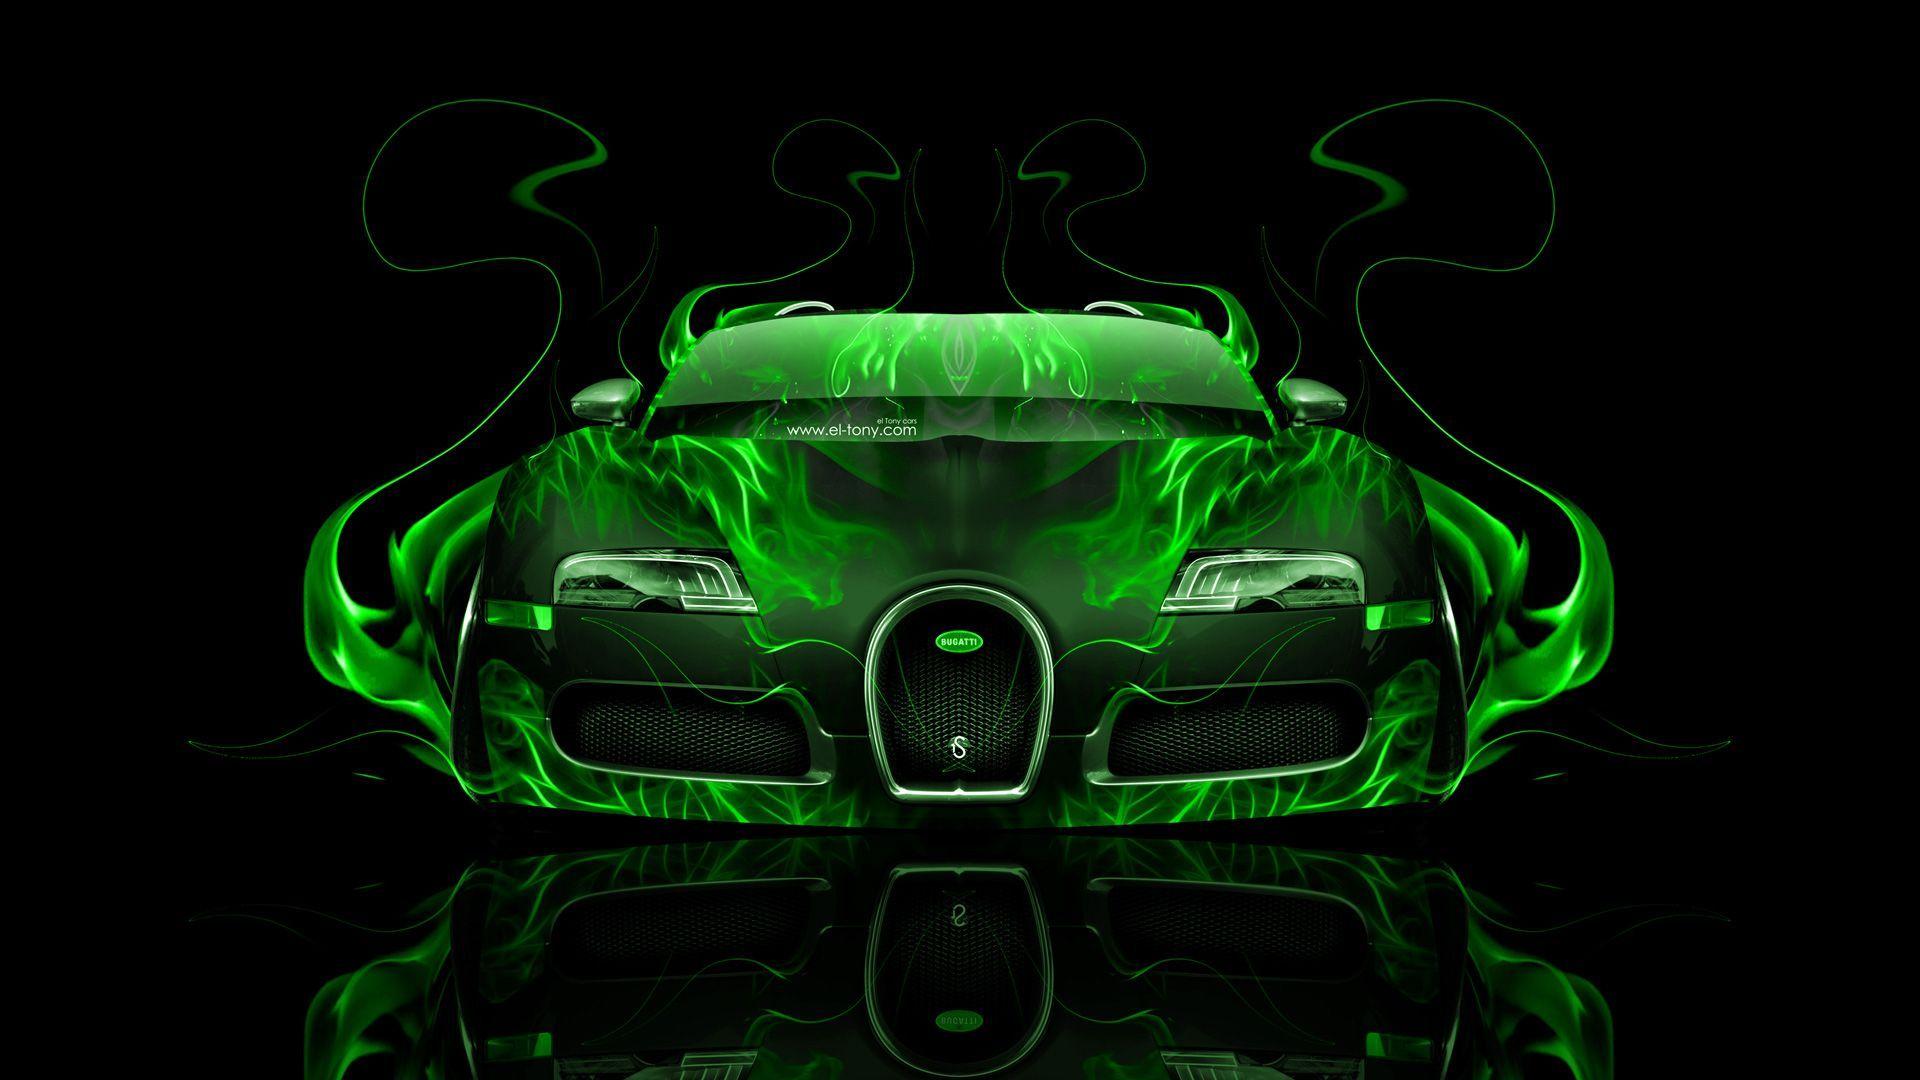 bugatti veyron front water car 2014 green neon design by tony kokhan Car Picture. Bugatti wallpaper, Cool wallpaper cars, Bugatti